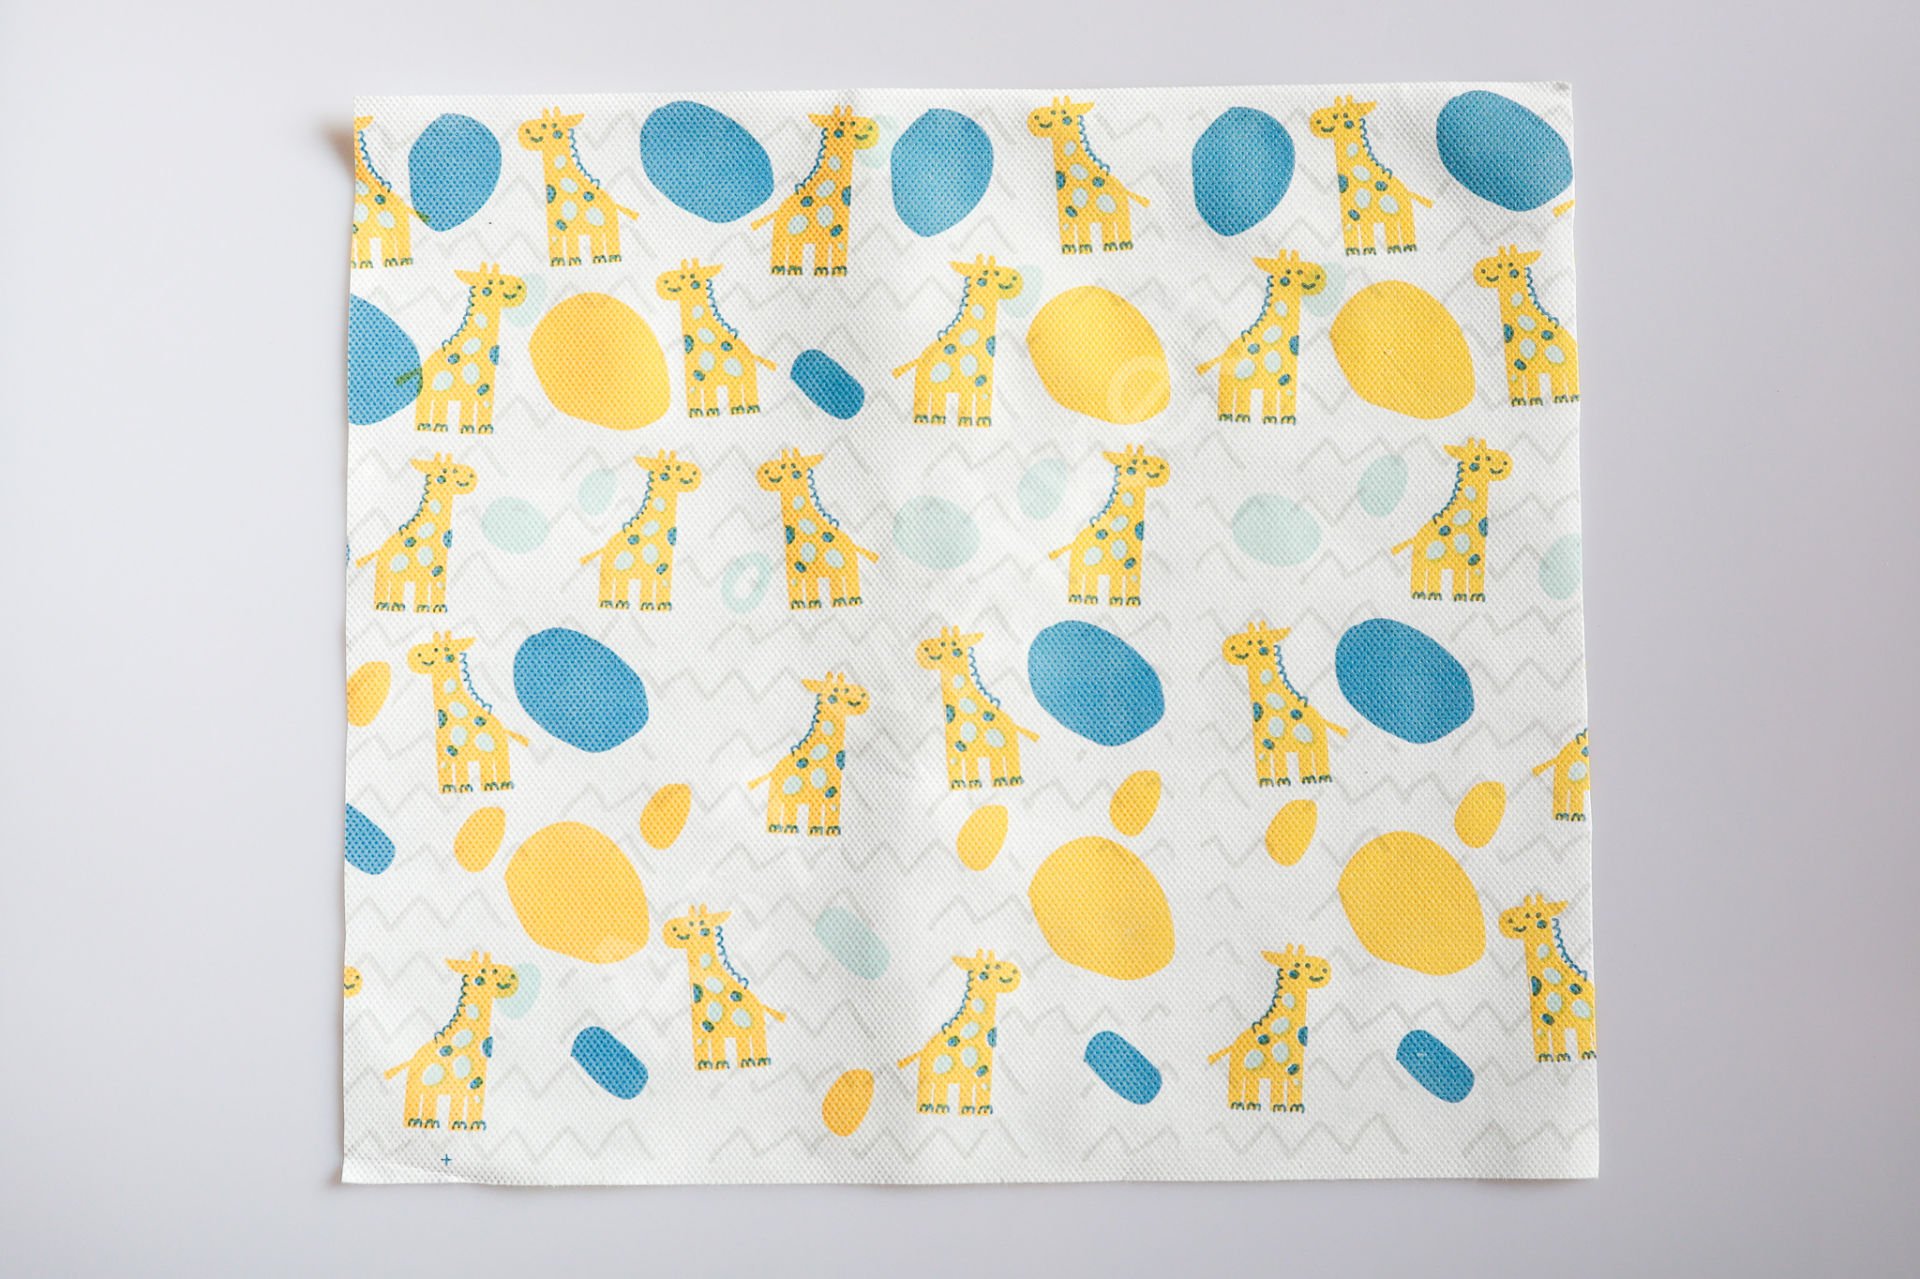 Bebek Amerikan Servis Zürafa Desenli 200'lü Paket